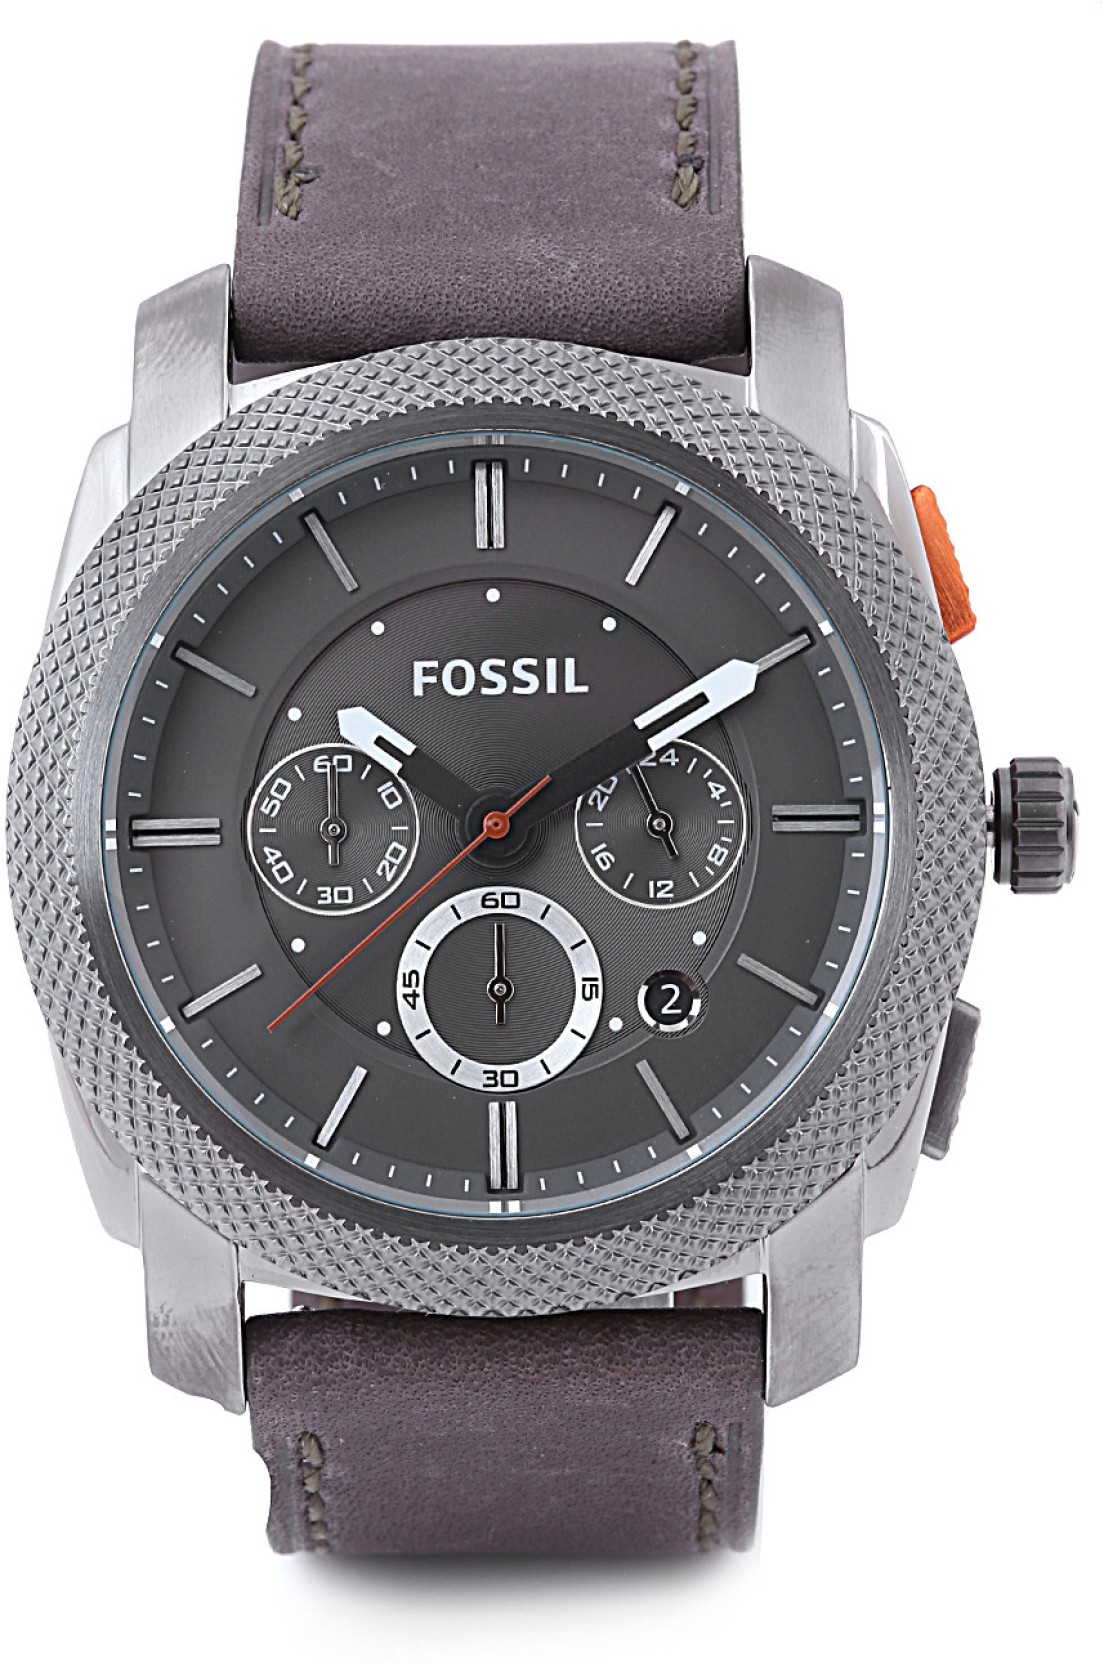 Fossil FS4777 MACHINE Watch - For Men - Buy Fossil FS4777 MACHINE Watch ...